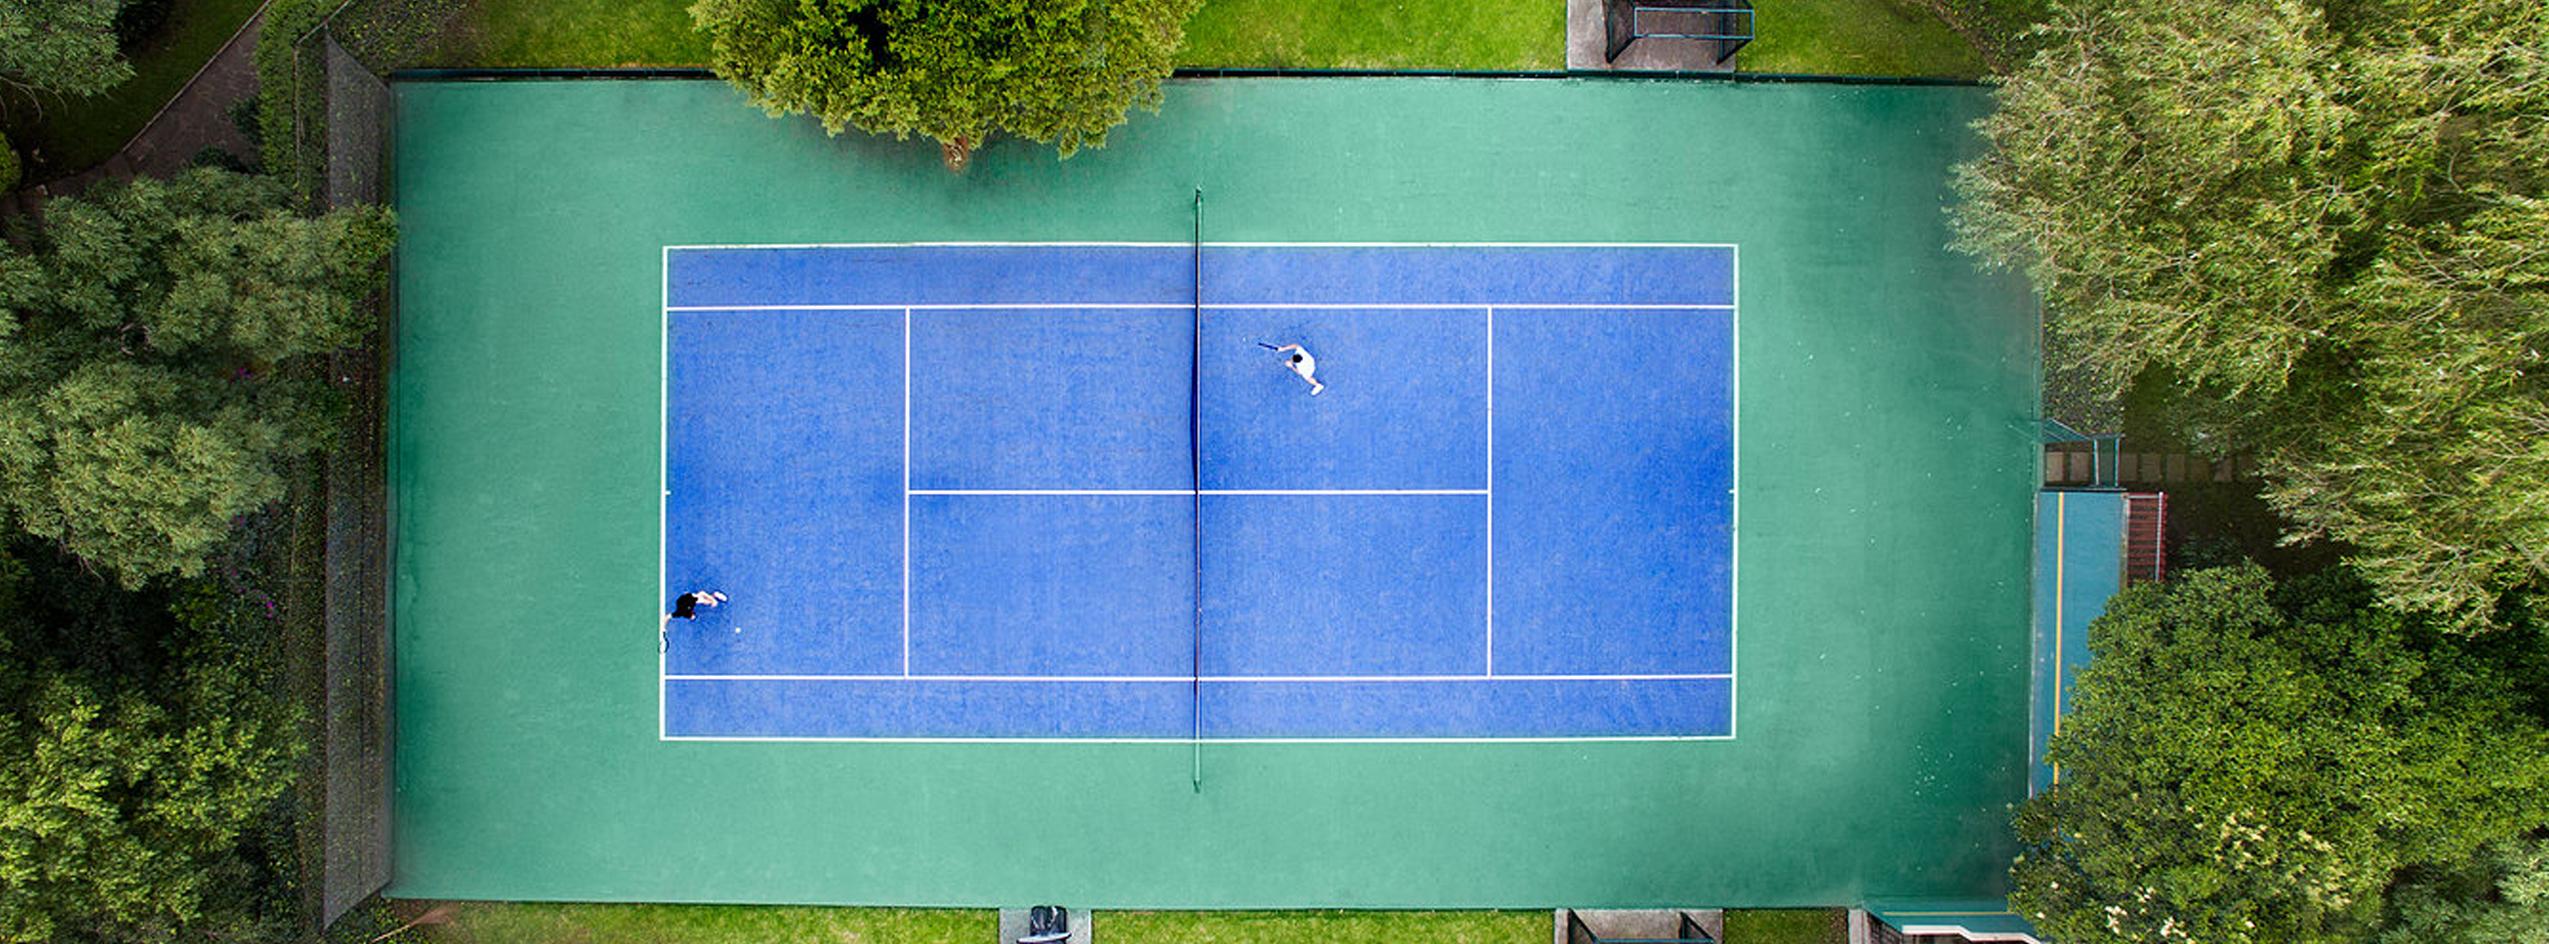 Berger Jensolin Tennis Court Paint, 4 Liter, Green/Red Primer | Immenso